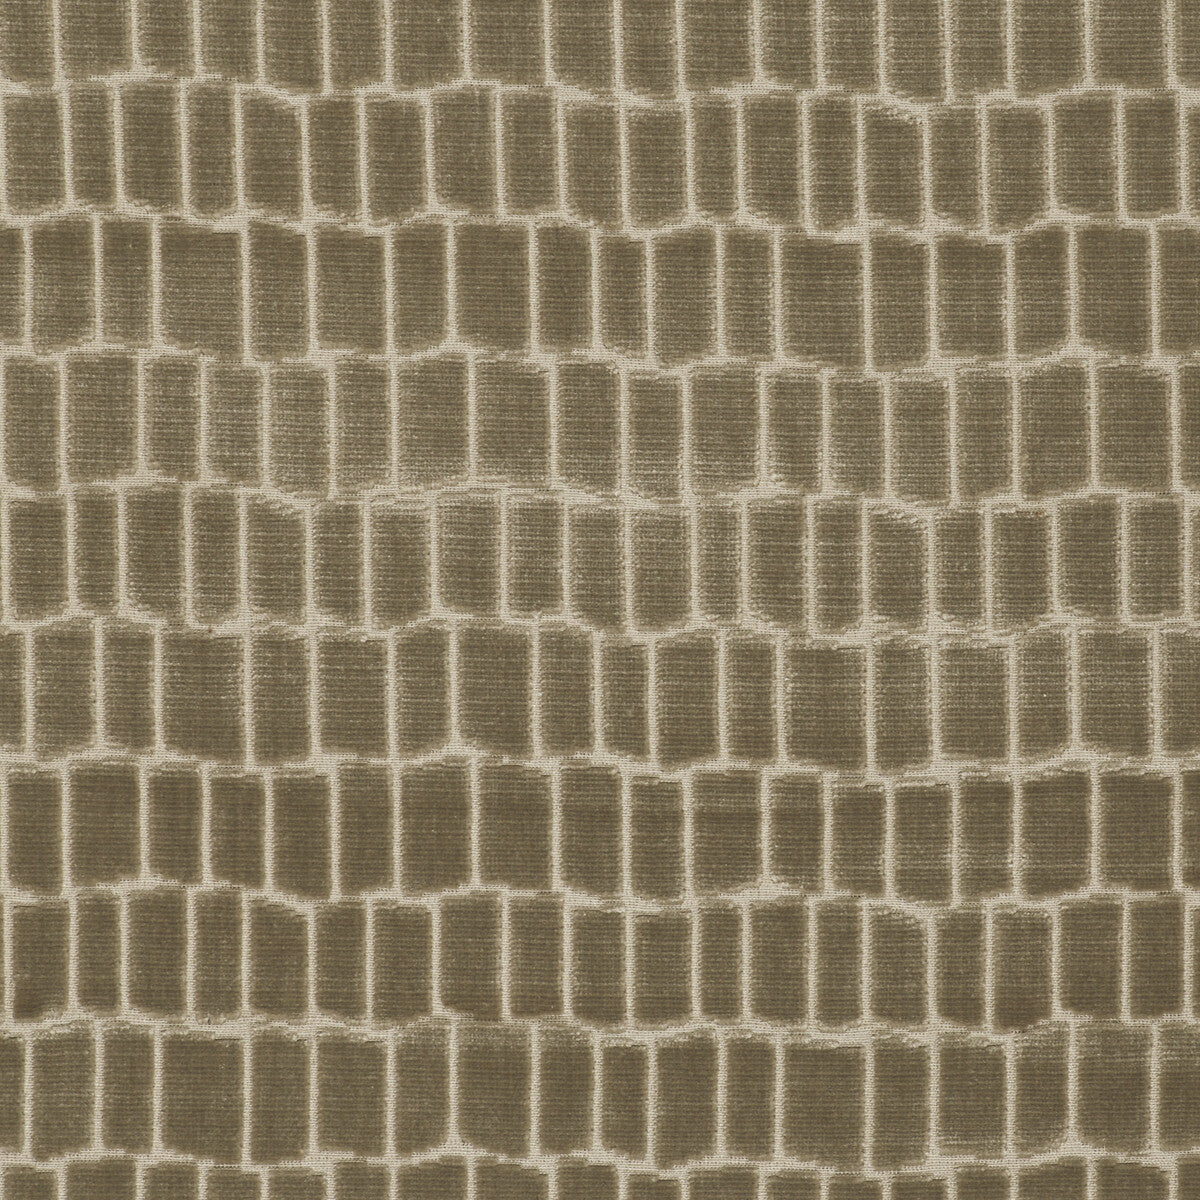 Maximo fabric in lino color - pattern LCT1015.002.0 - by Gaston y Daniela in the Lorenzo Castillo V collection